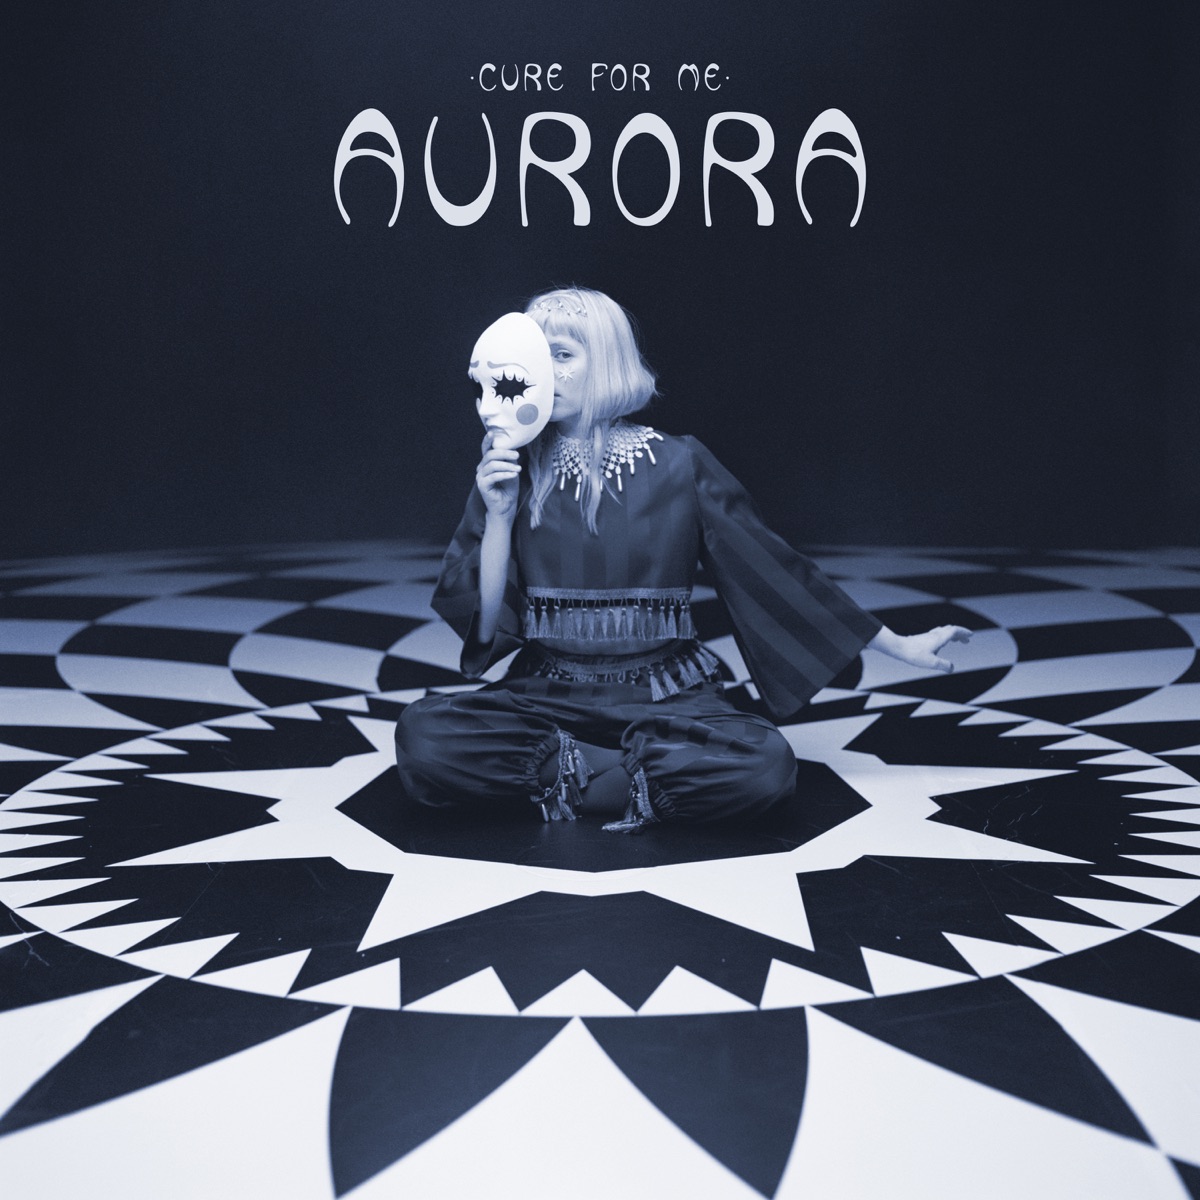 AURORA — Apple Music